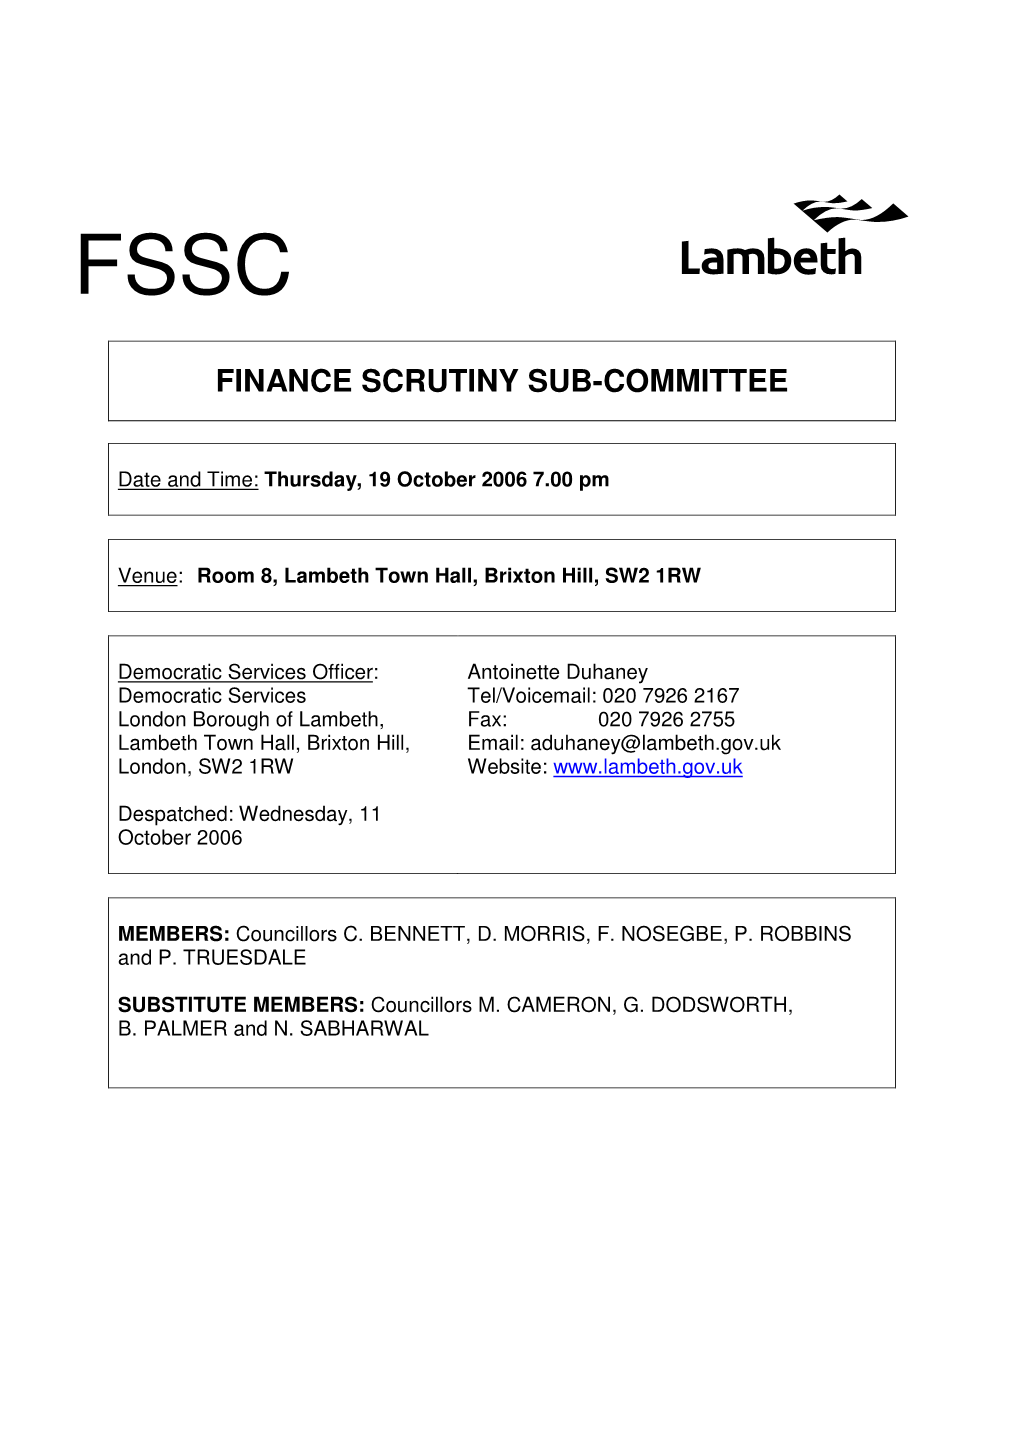 Finance Scrutiny Sub-Committee